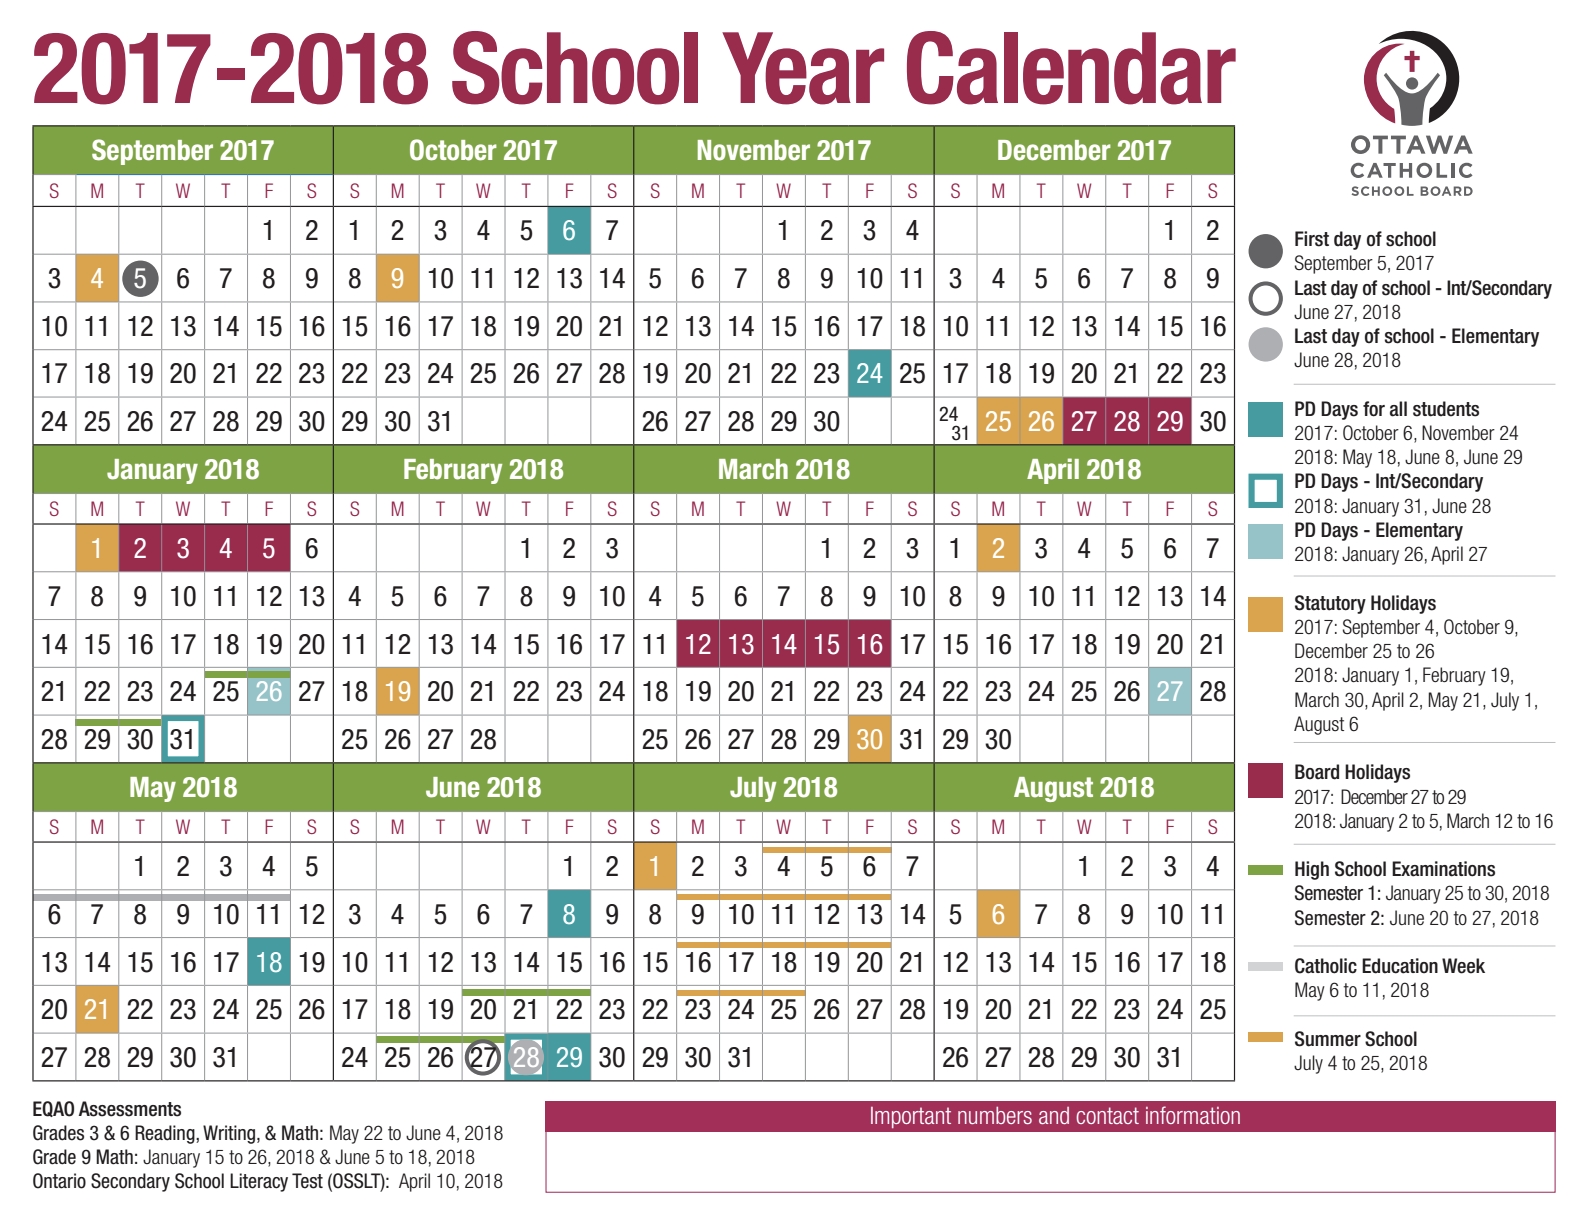 Ocsb-School-Calendar-2017-2018-Image - Ocsb Incredible Number 4 School Calendar